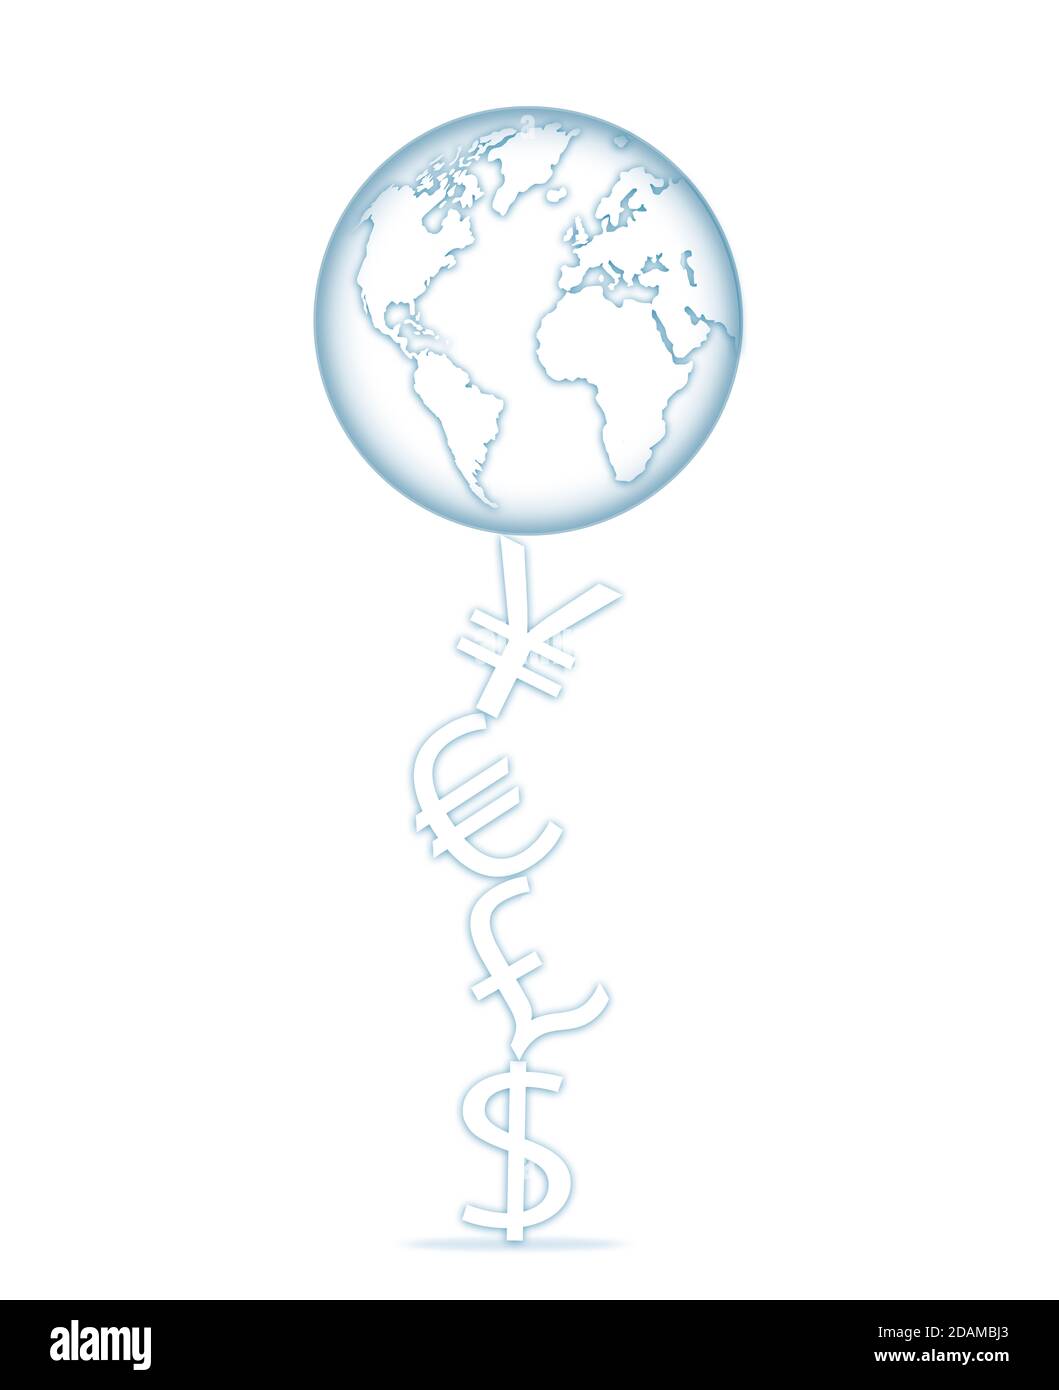 Earth balancing on currency symbols, illustration. Stock Photo